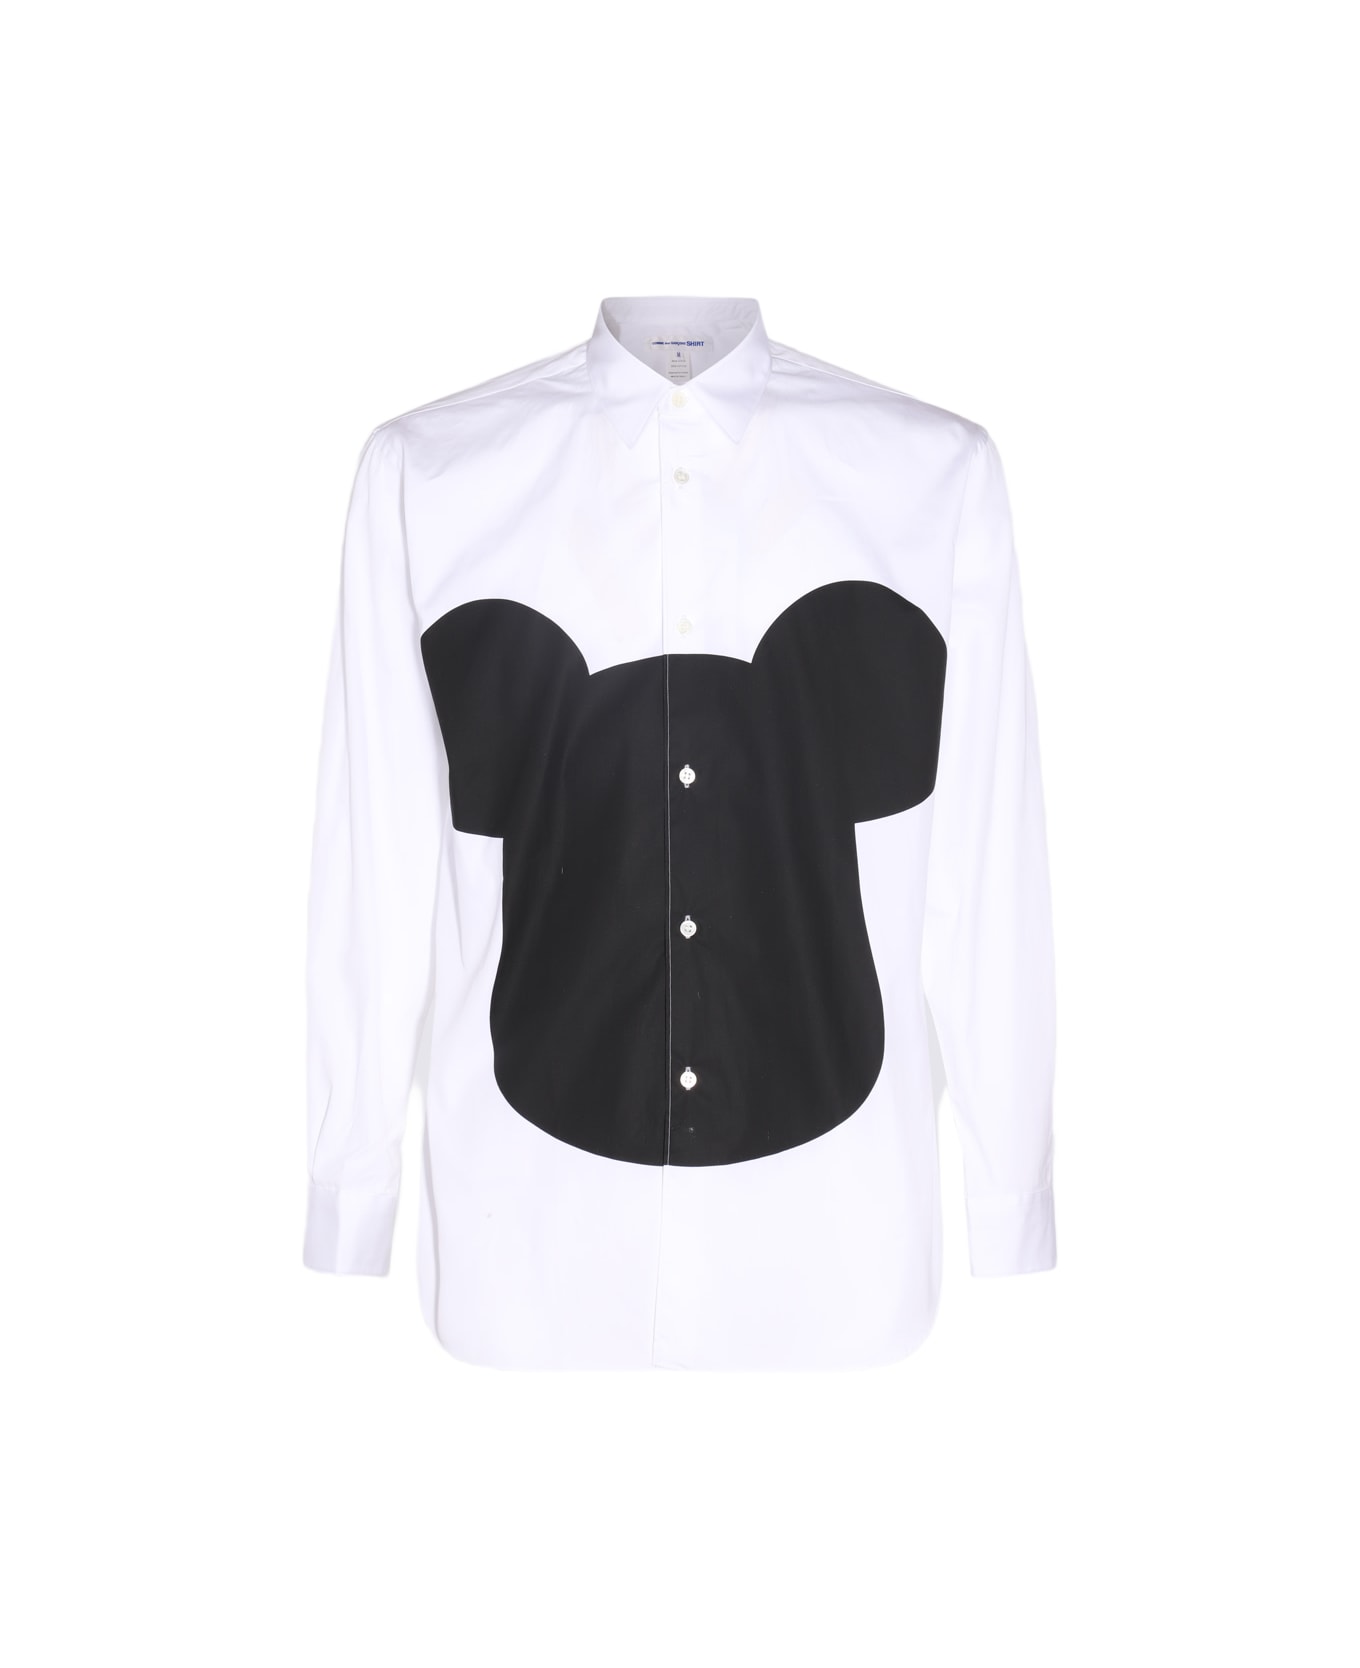 Comme des Garçons White Cotton Mickey Mouse Shirt - White シャツ